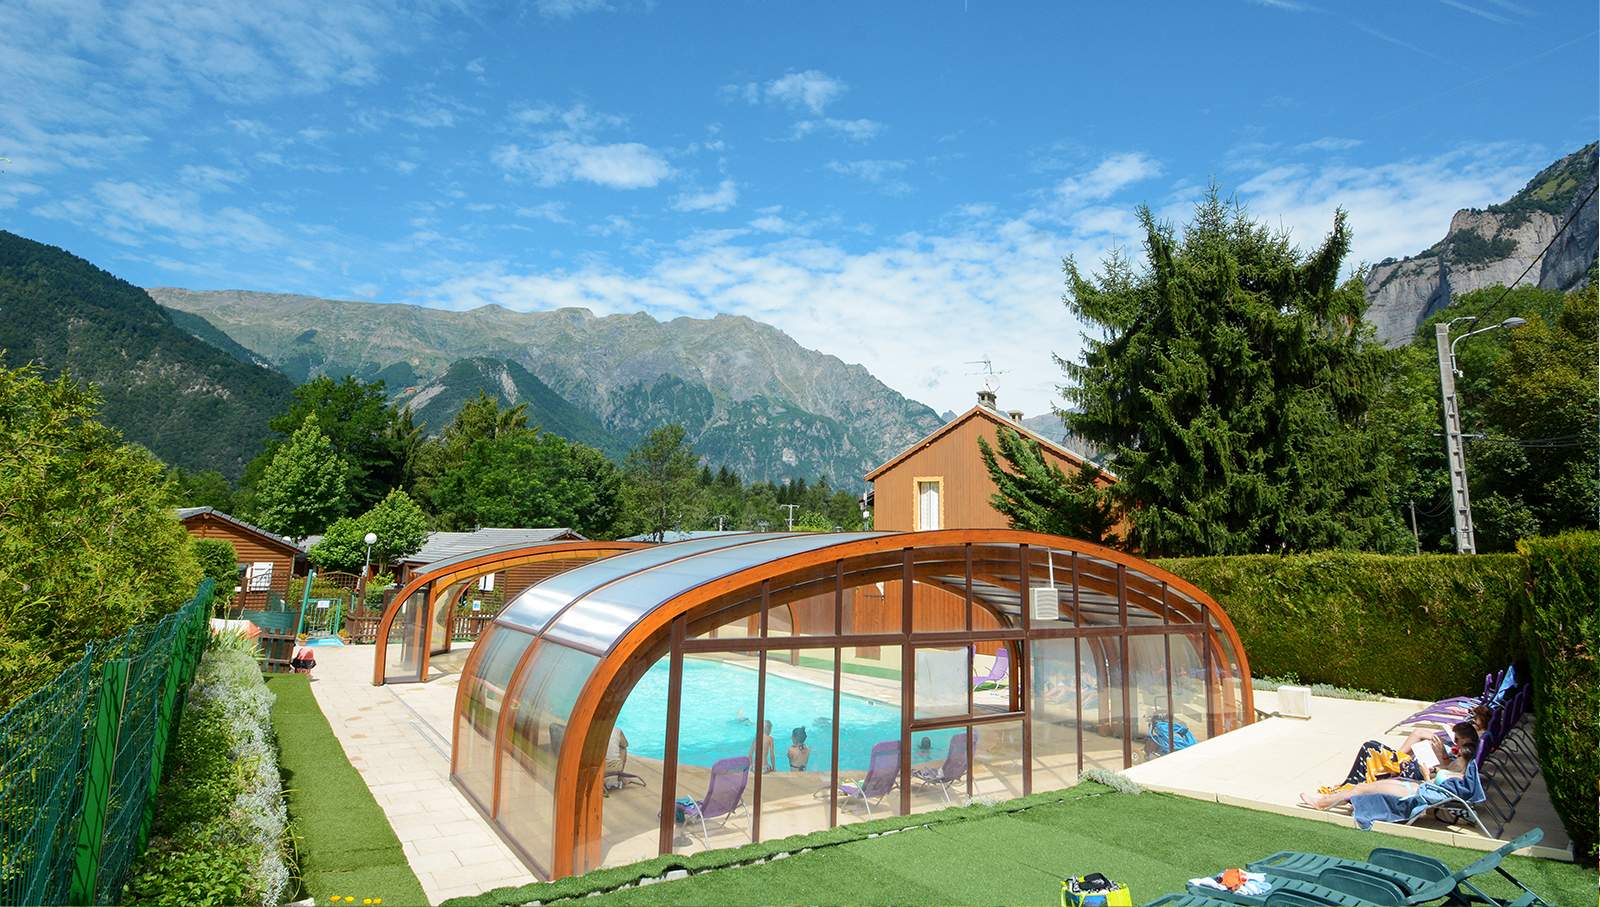 Camper dans les Alpes : où séjourner dans le prestige ?